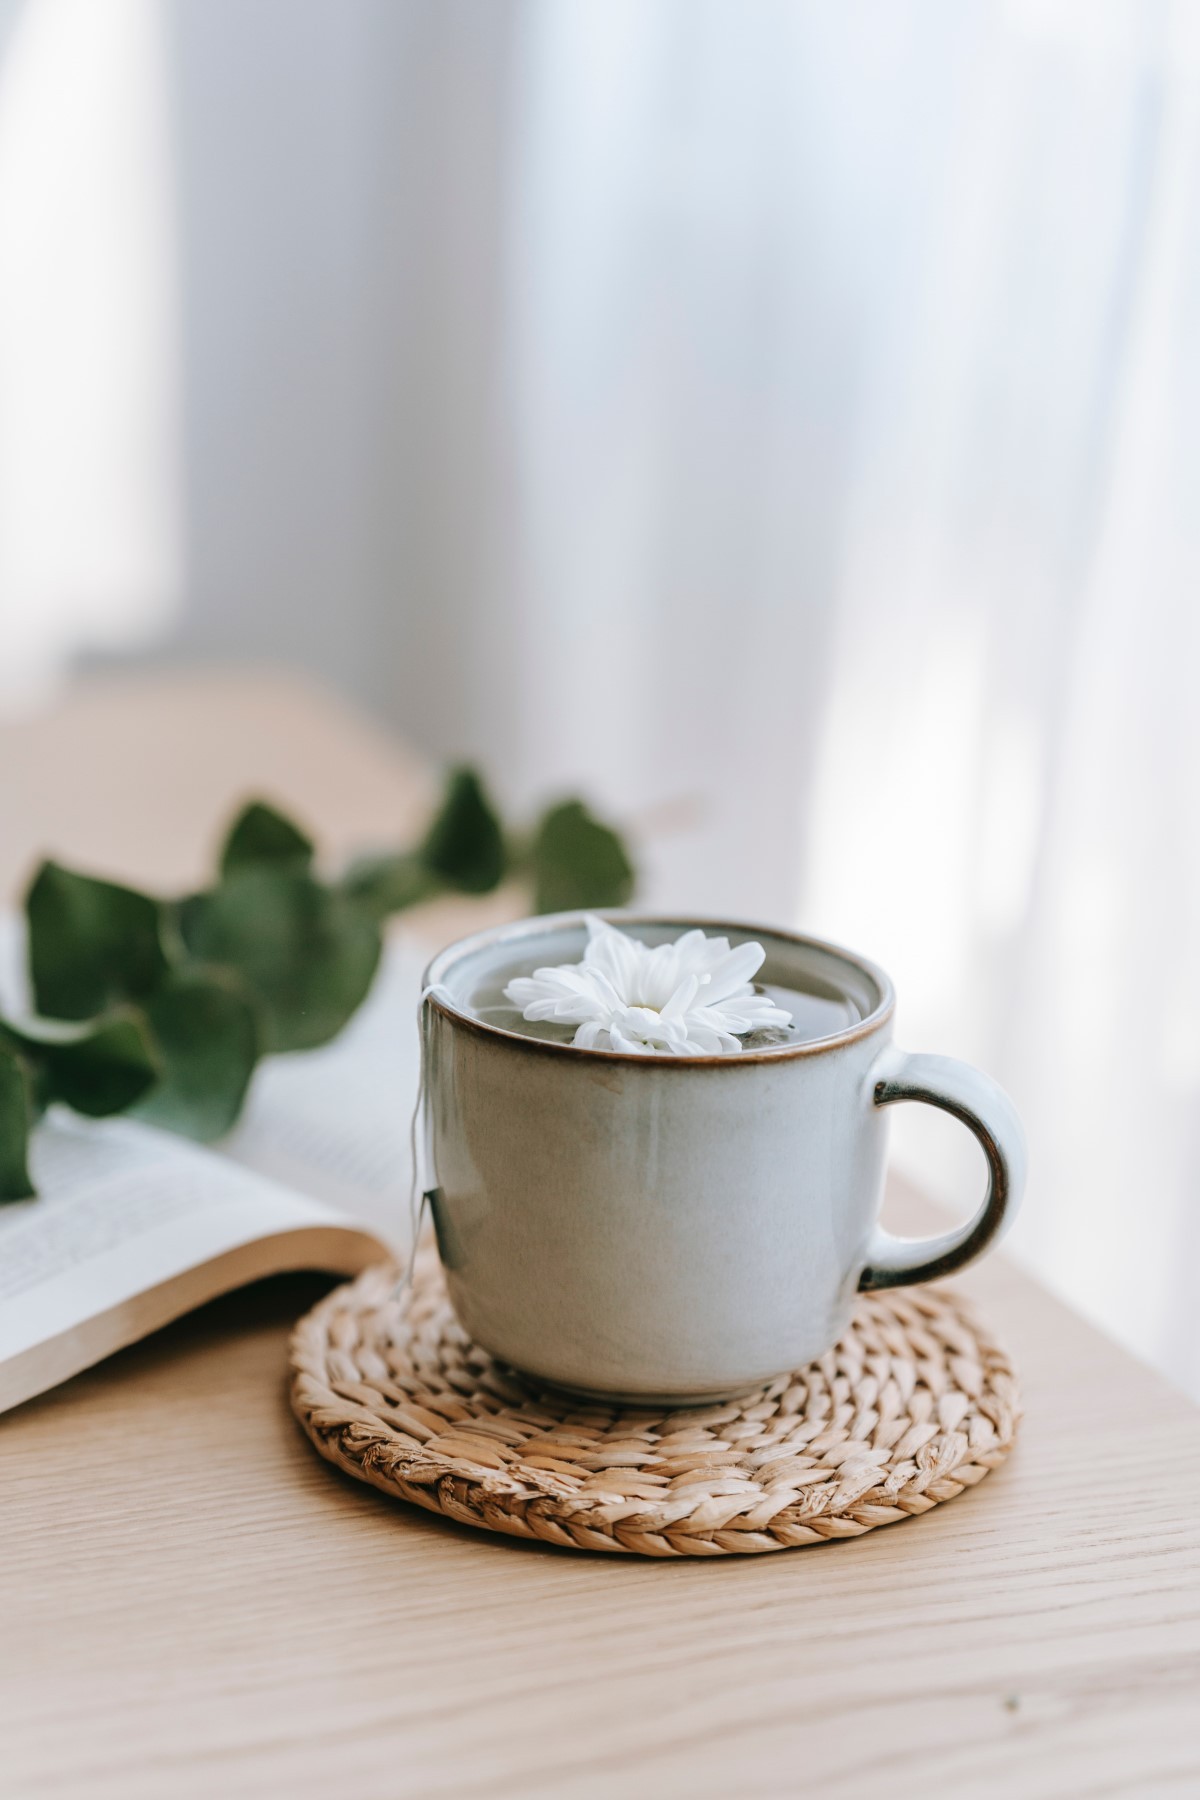 O chá de camomila acalma e auxilia no processo digestivo (Foto: Pexels / Teona Swift / CreativeCommons)